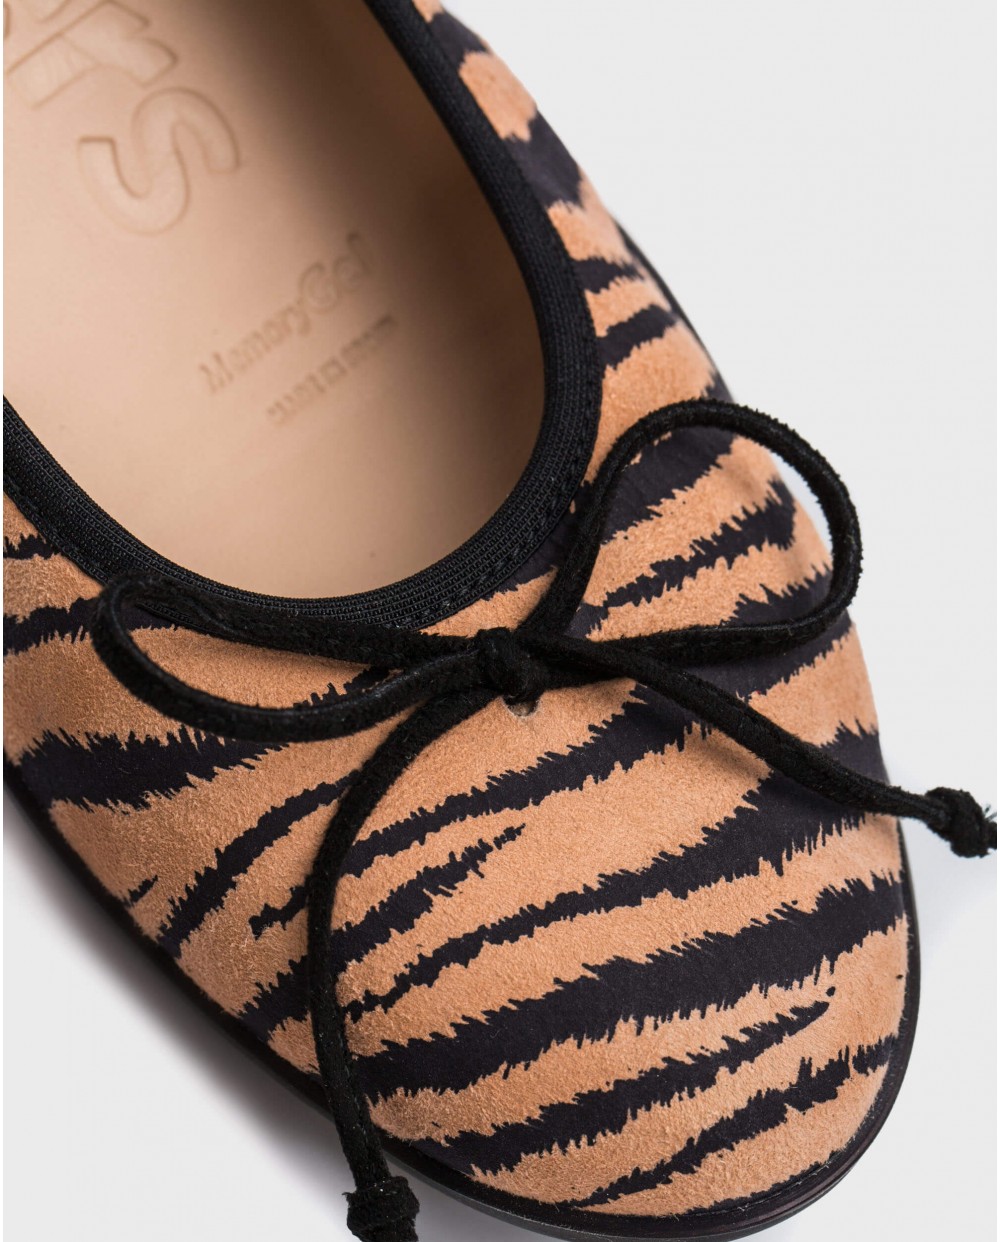 Wonders-Zapatos planos-Bailarina grabado zebra detalle lazo